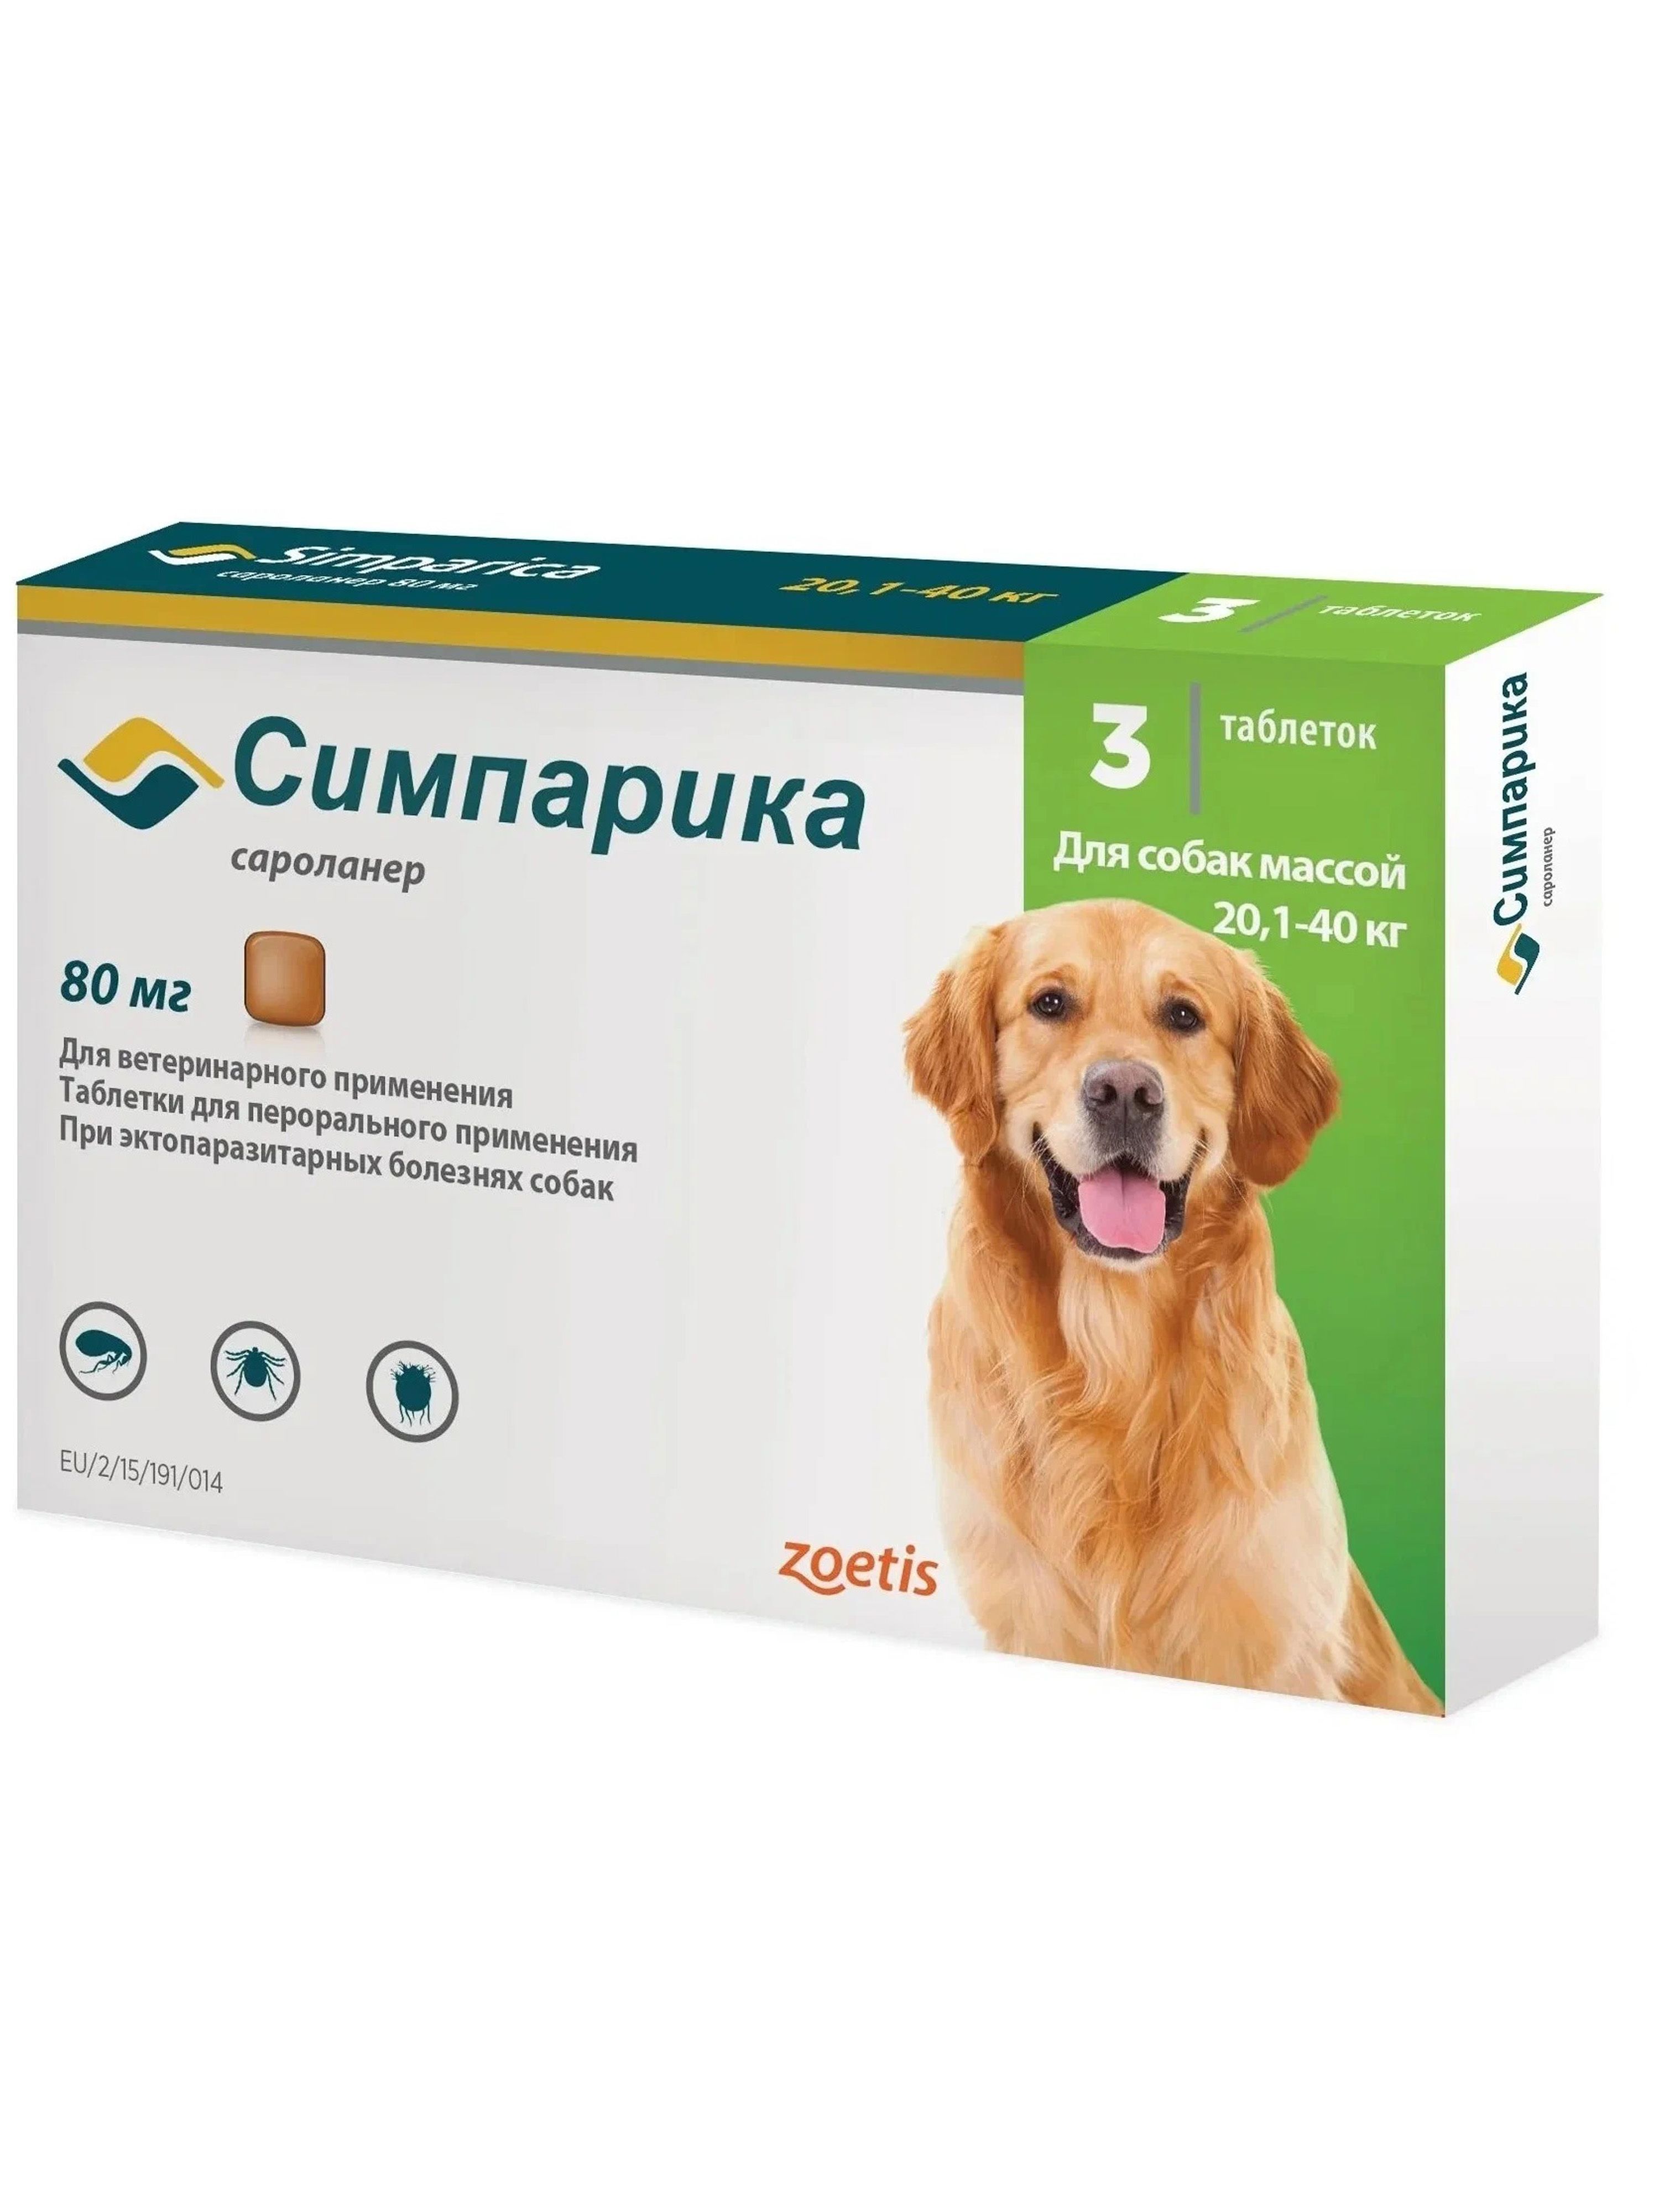 Можно ли делить таблетку симпарика. Симпарика для собак 10-20кг. Таблетка от блох и клещей для собак Симпарика. Симпарика таблетка для собак 40 мг. Симпарика 1.3-2.5 кг.